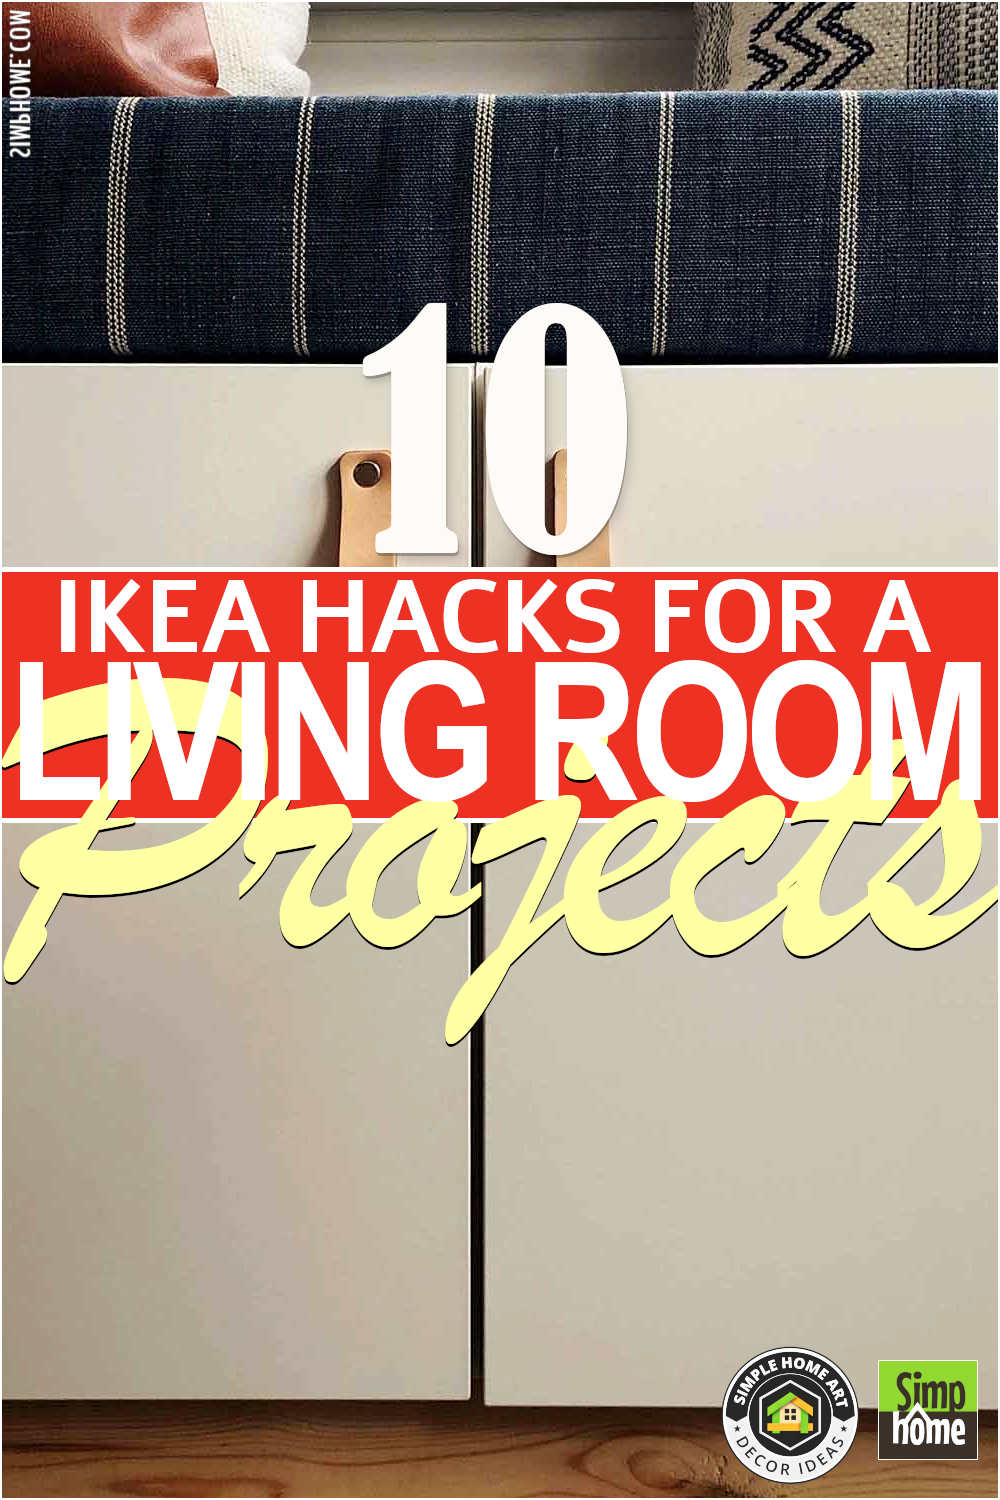 IKEA hack for living room